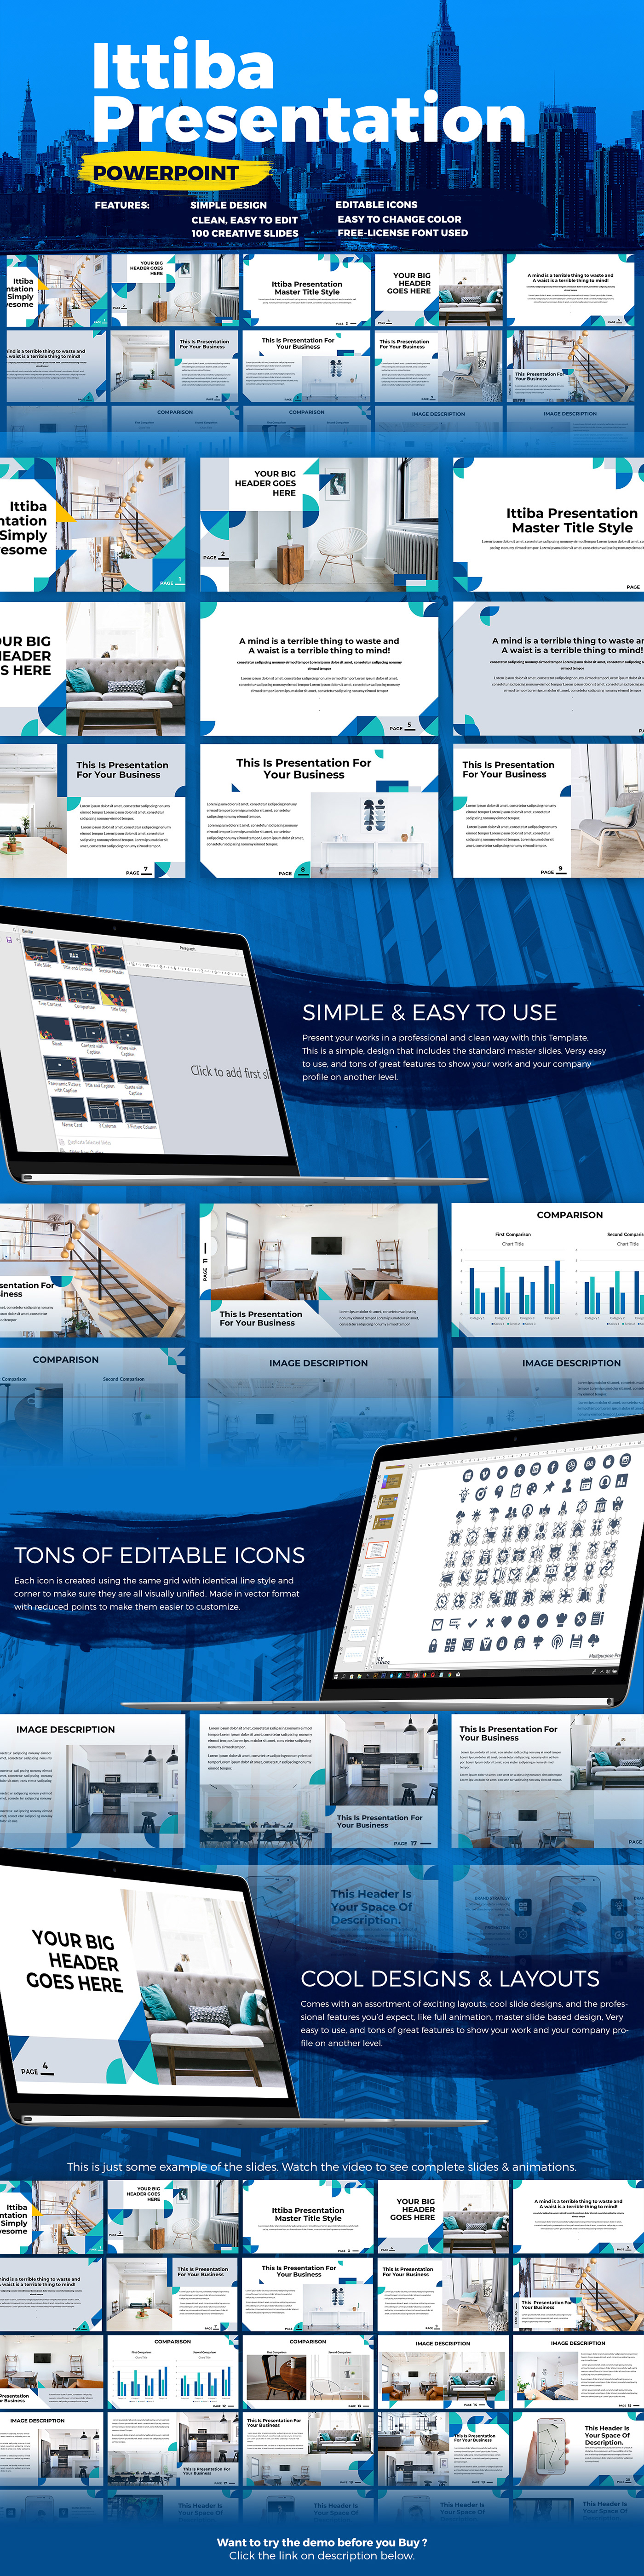 free freebie download template presentation infographic Powerpoint Keynote pptx blue